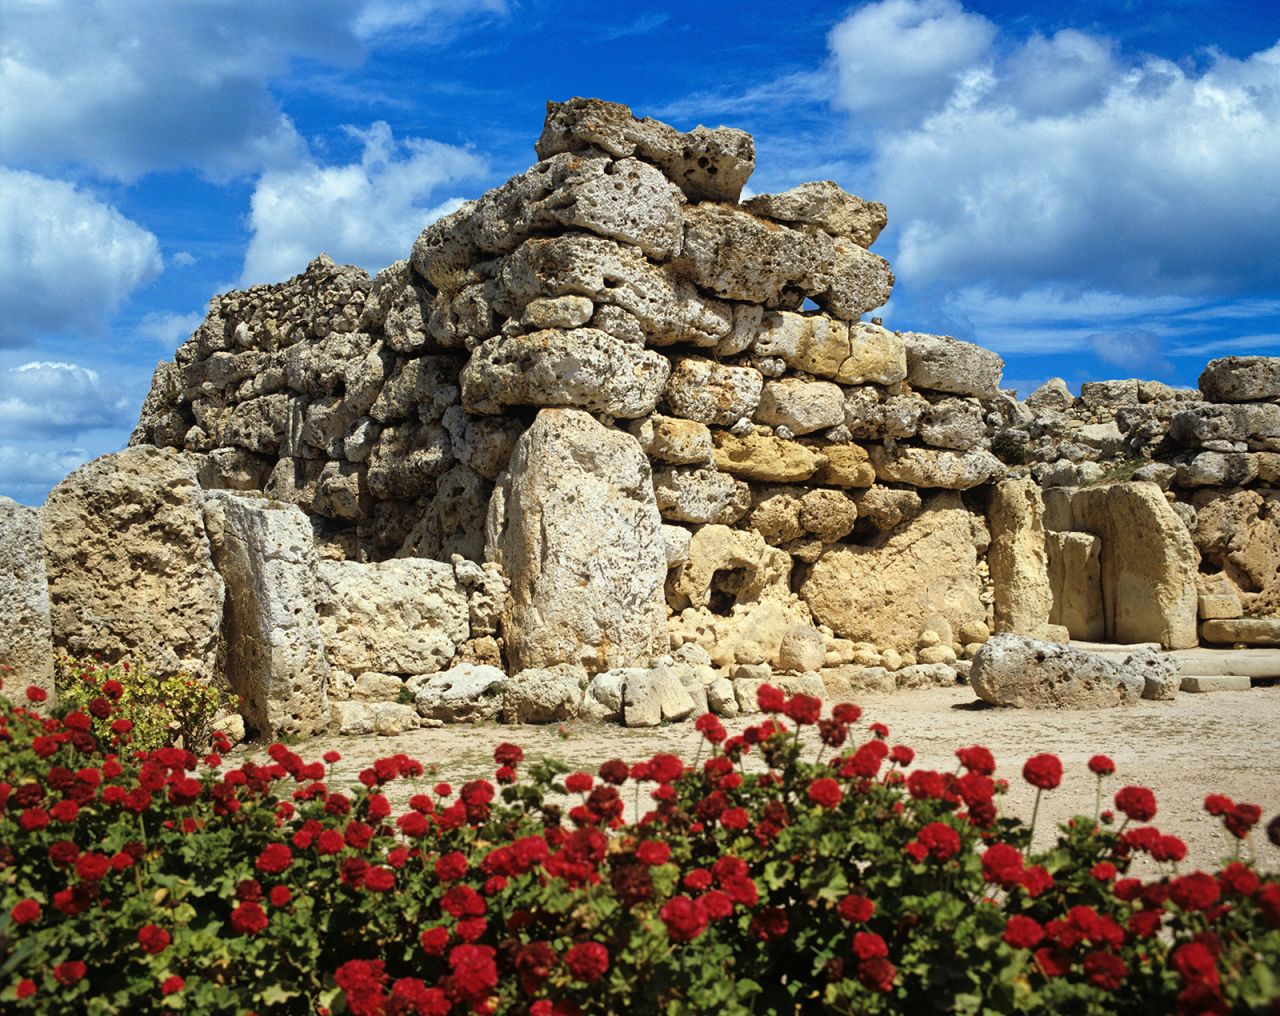 Ġgantija is a 5,500 year old temple on Gozo.